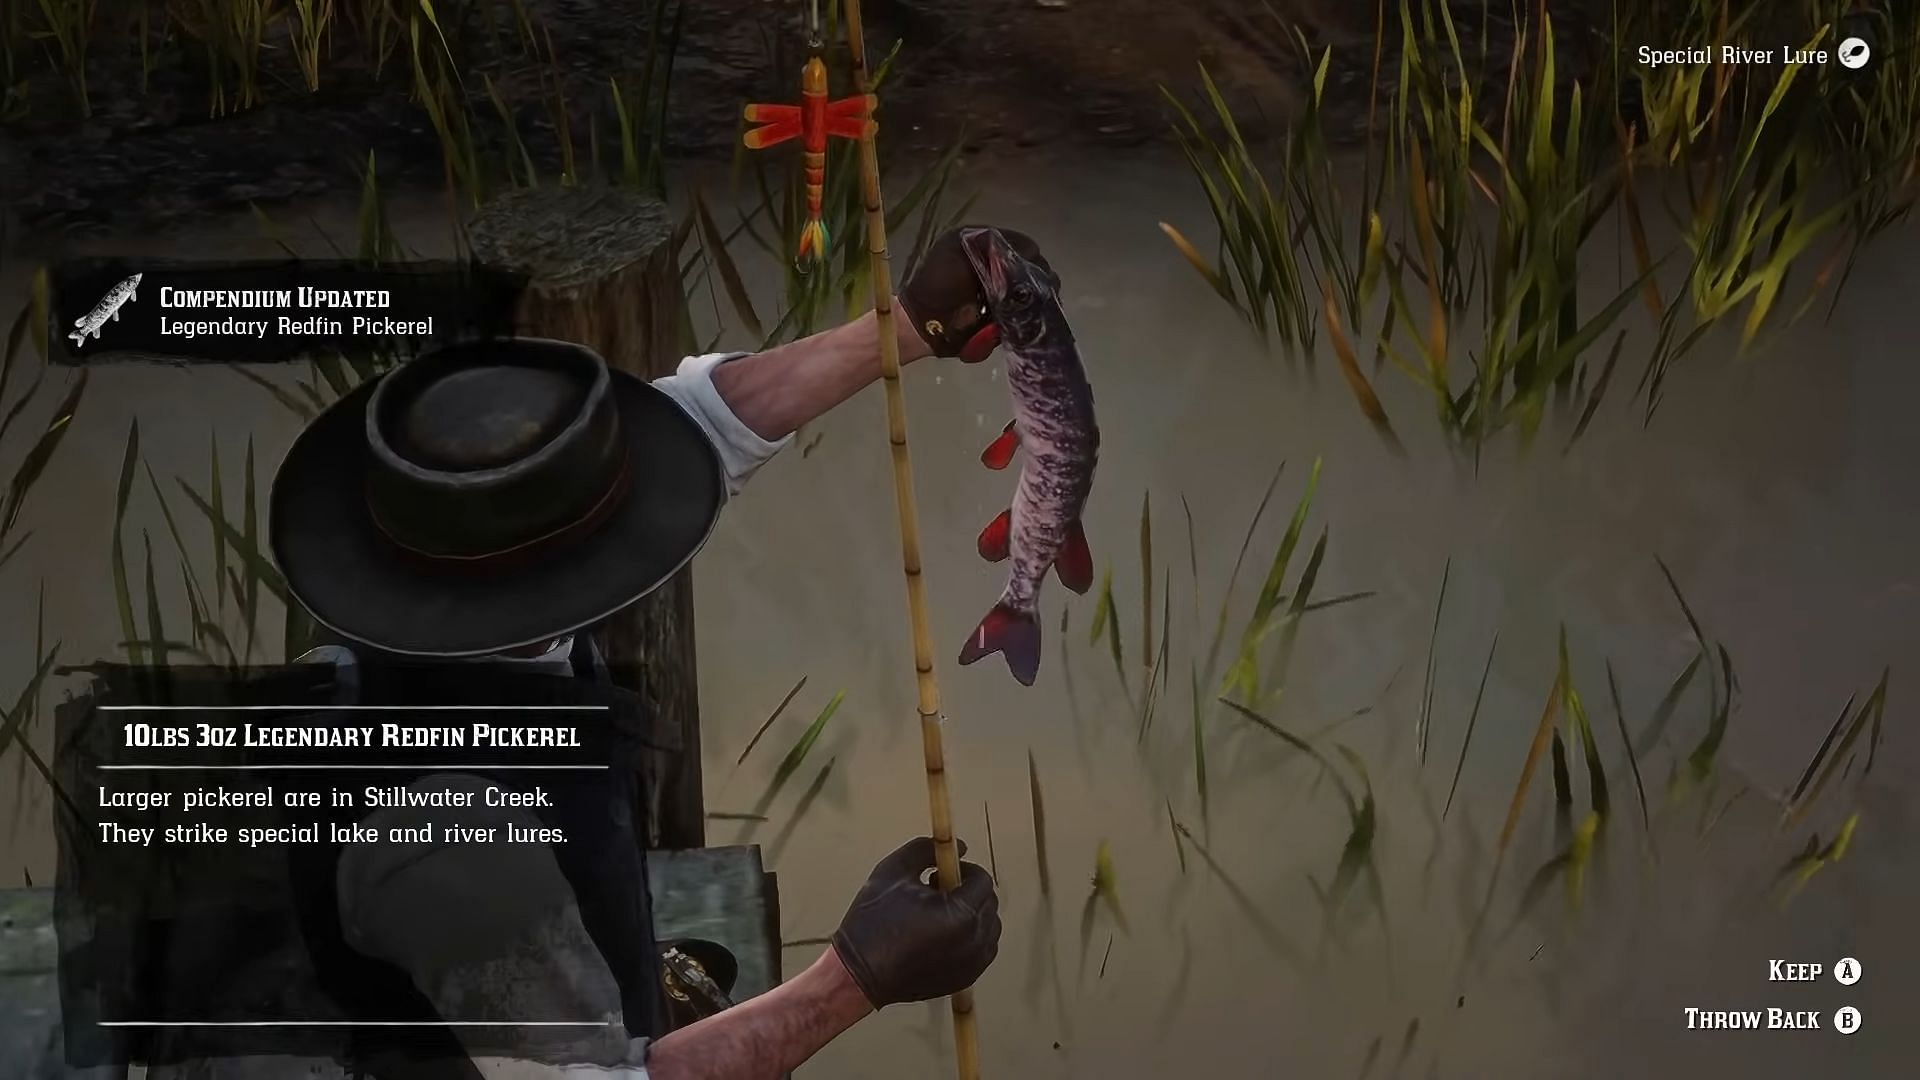 The Legendary Redfin Pickerel (Image via Rockstar Games || YouTube/Reptac)